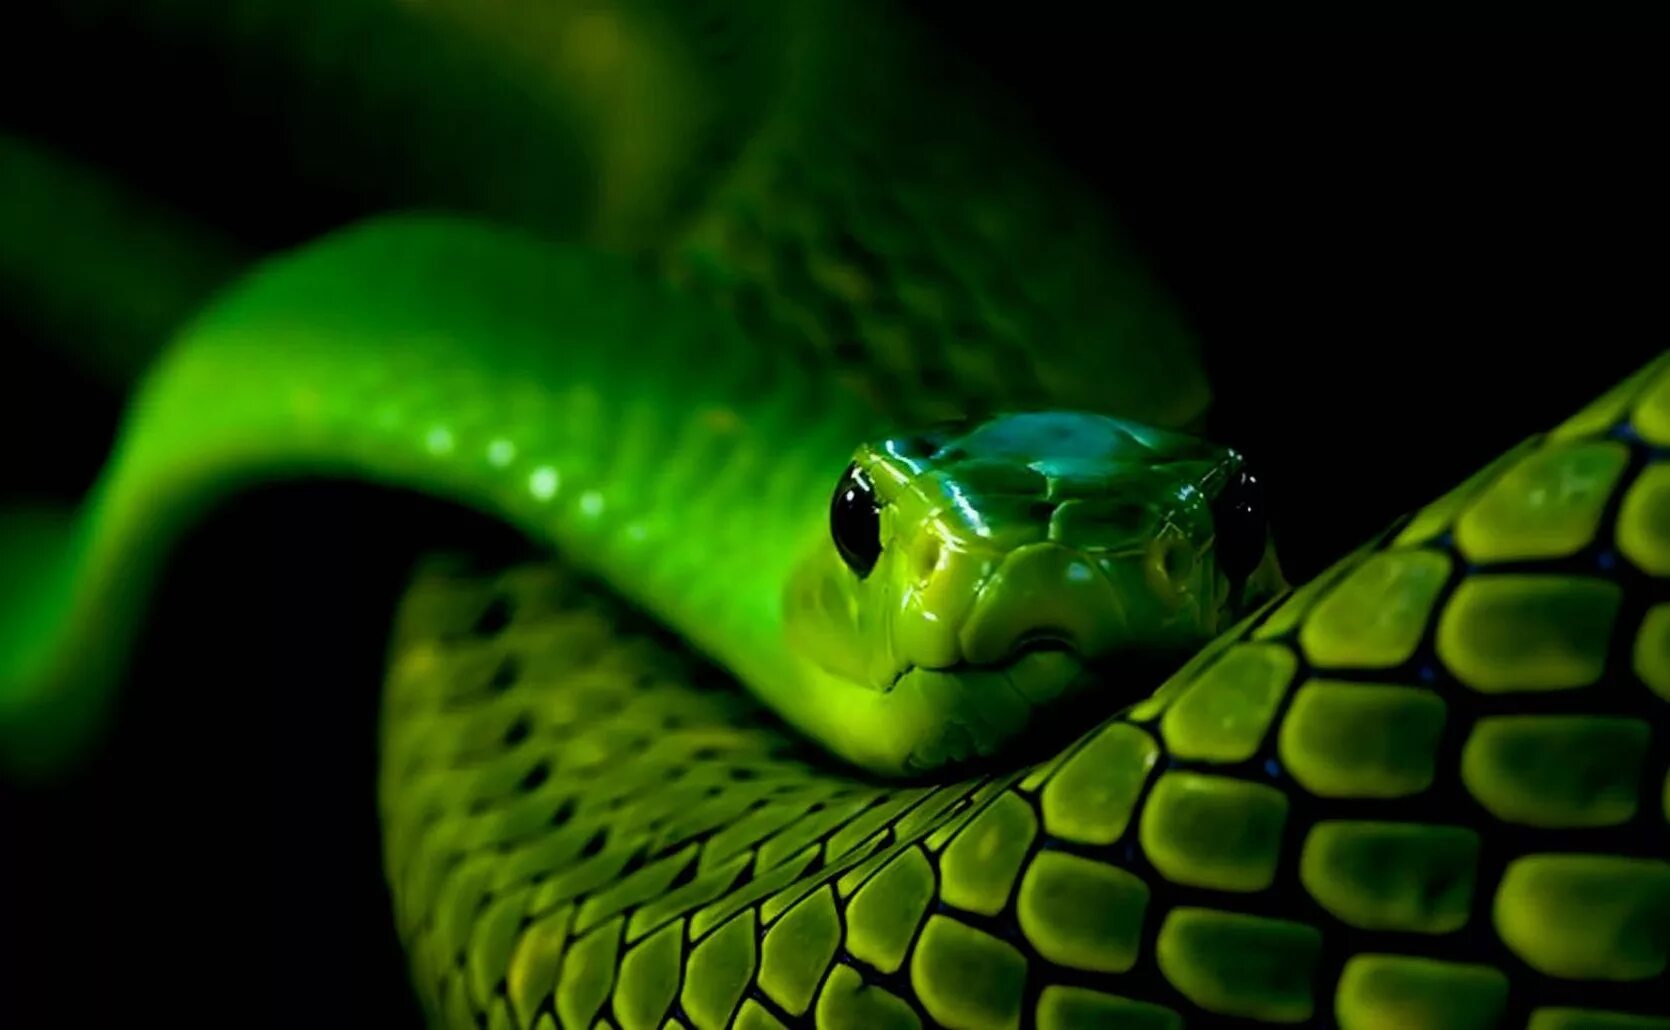 Картинки змей. Змея. Змейка. Зелёная змея / Green Snake [2019] Green Snake. Питон картинки.